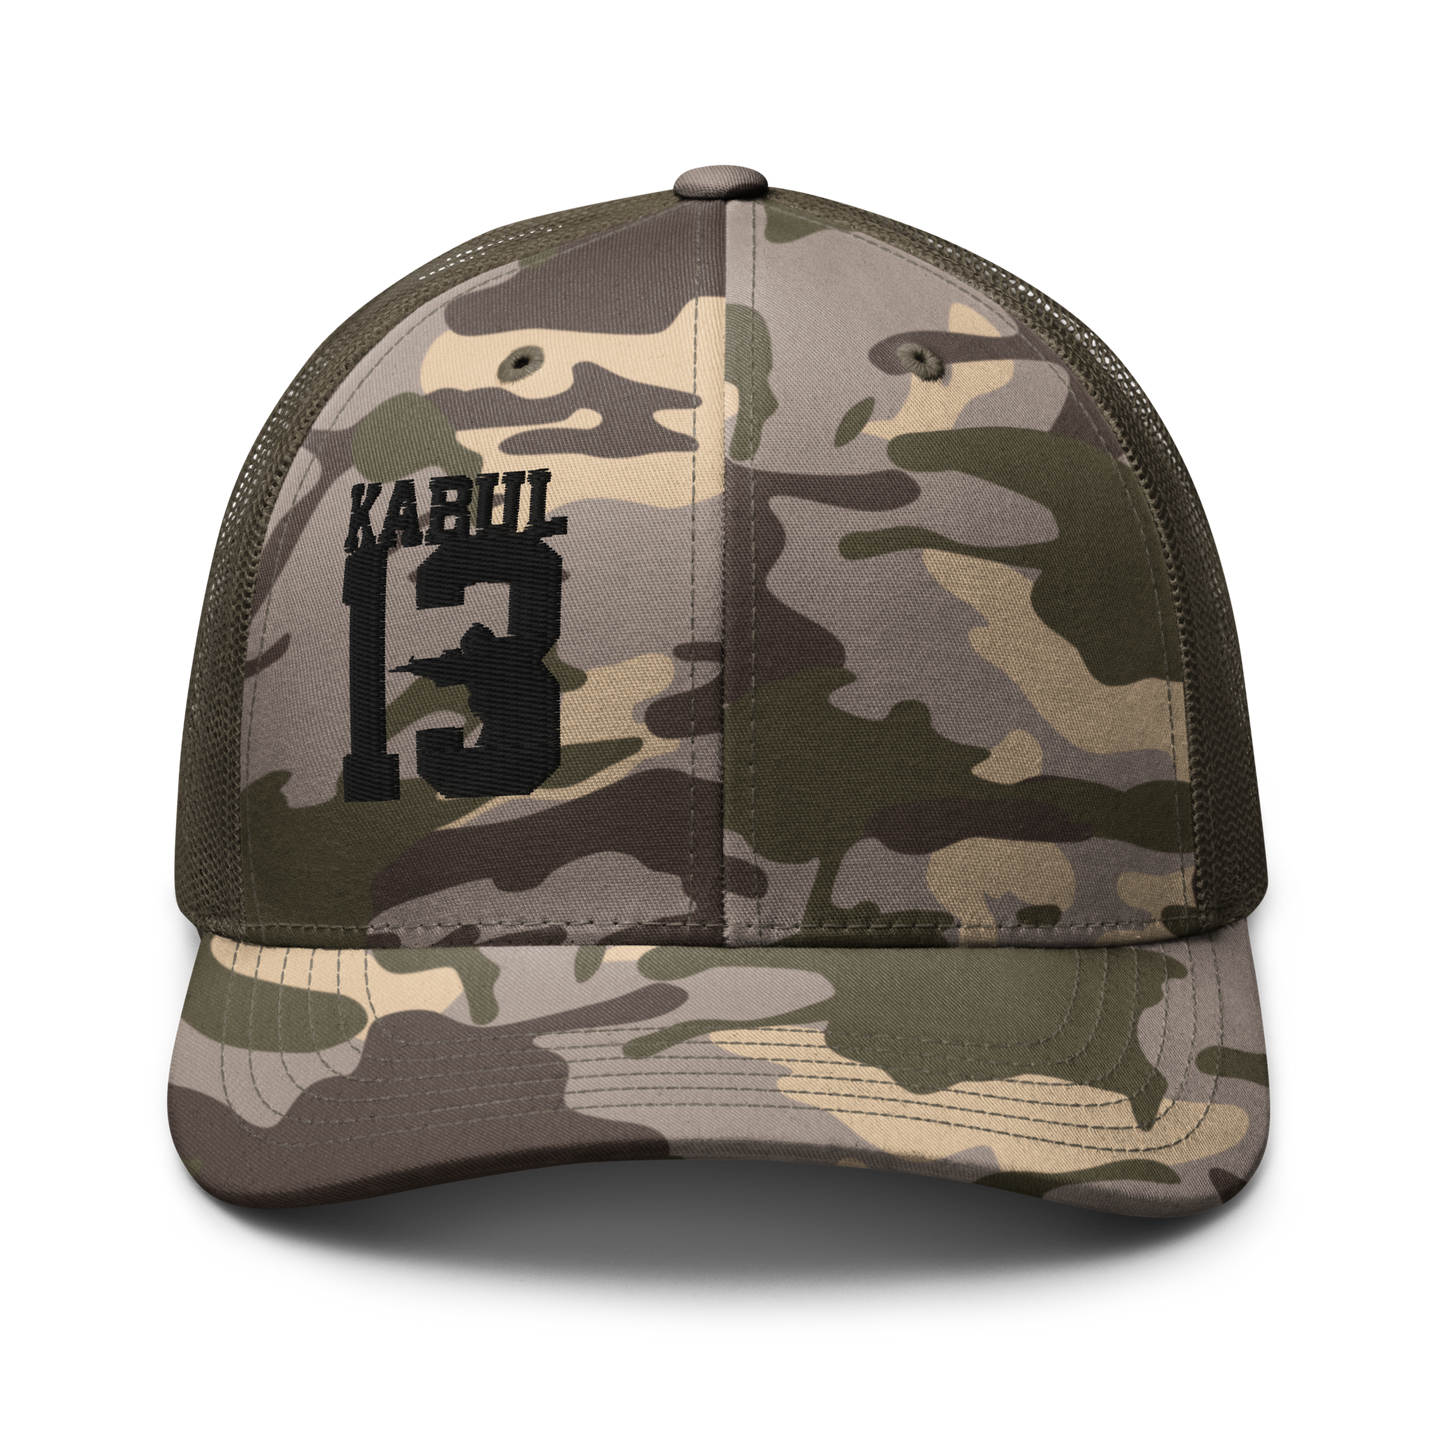 DIA Kabul 13 Abbey Gate Camouflage Trucker Hat